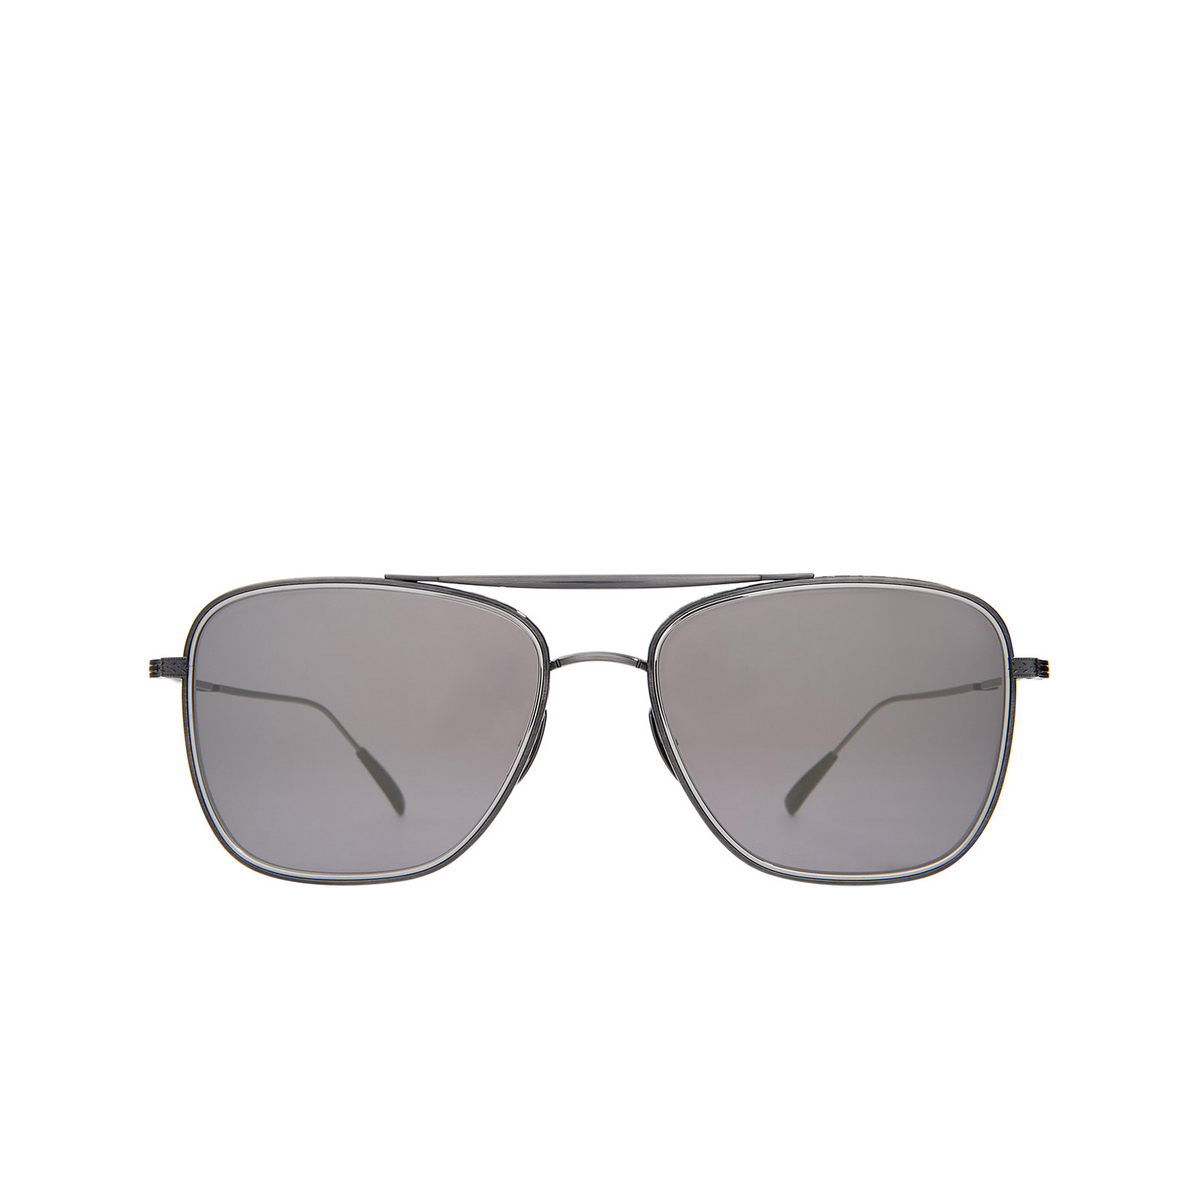 Mr. Leight NOVARRO S Sunglasses PW-BK/BM Pewter-Black - front view